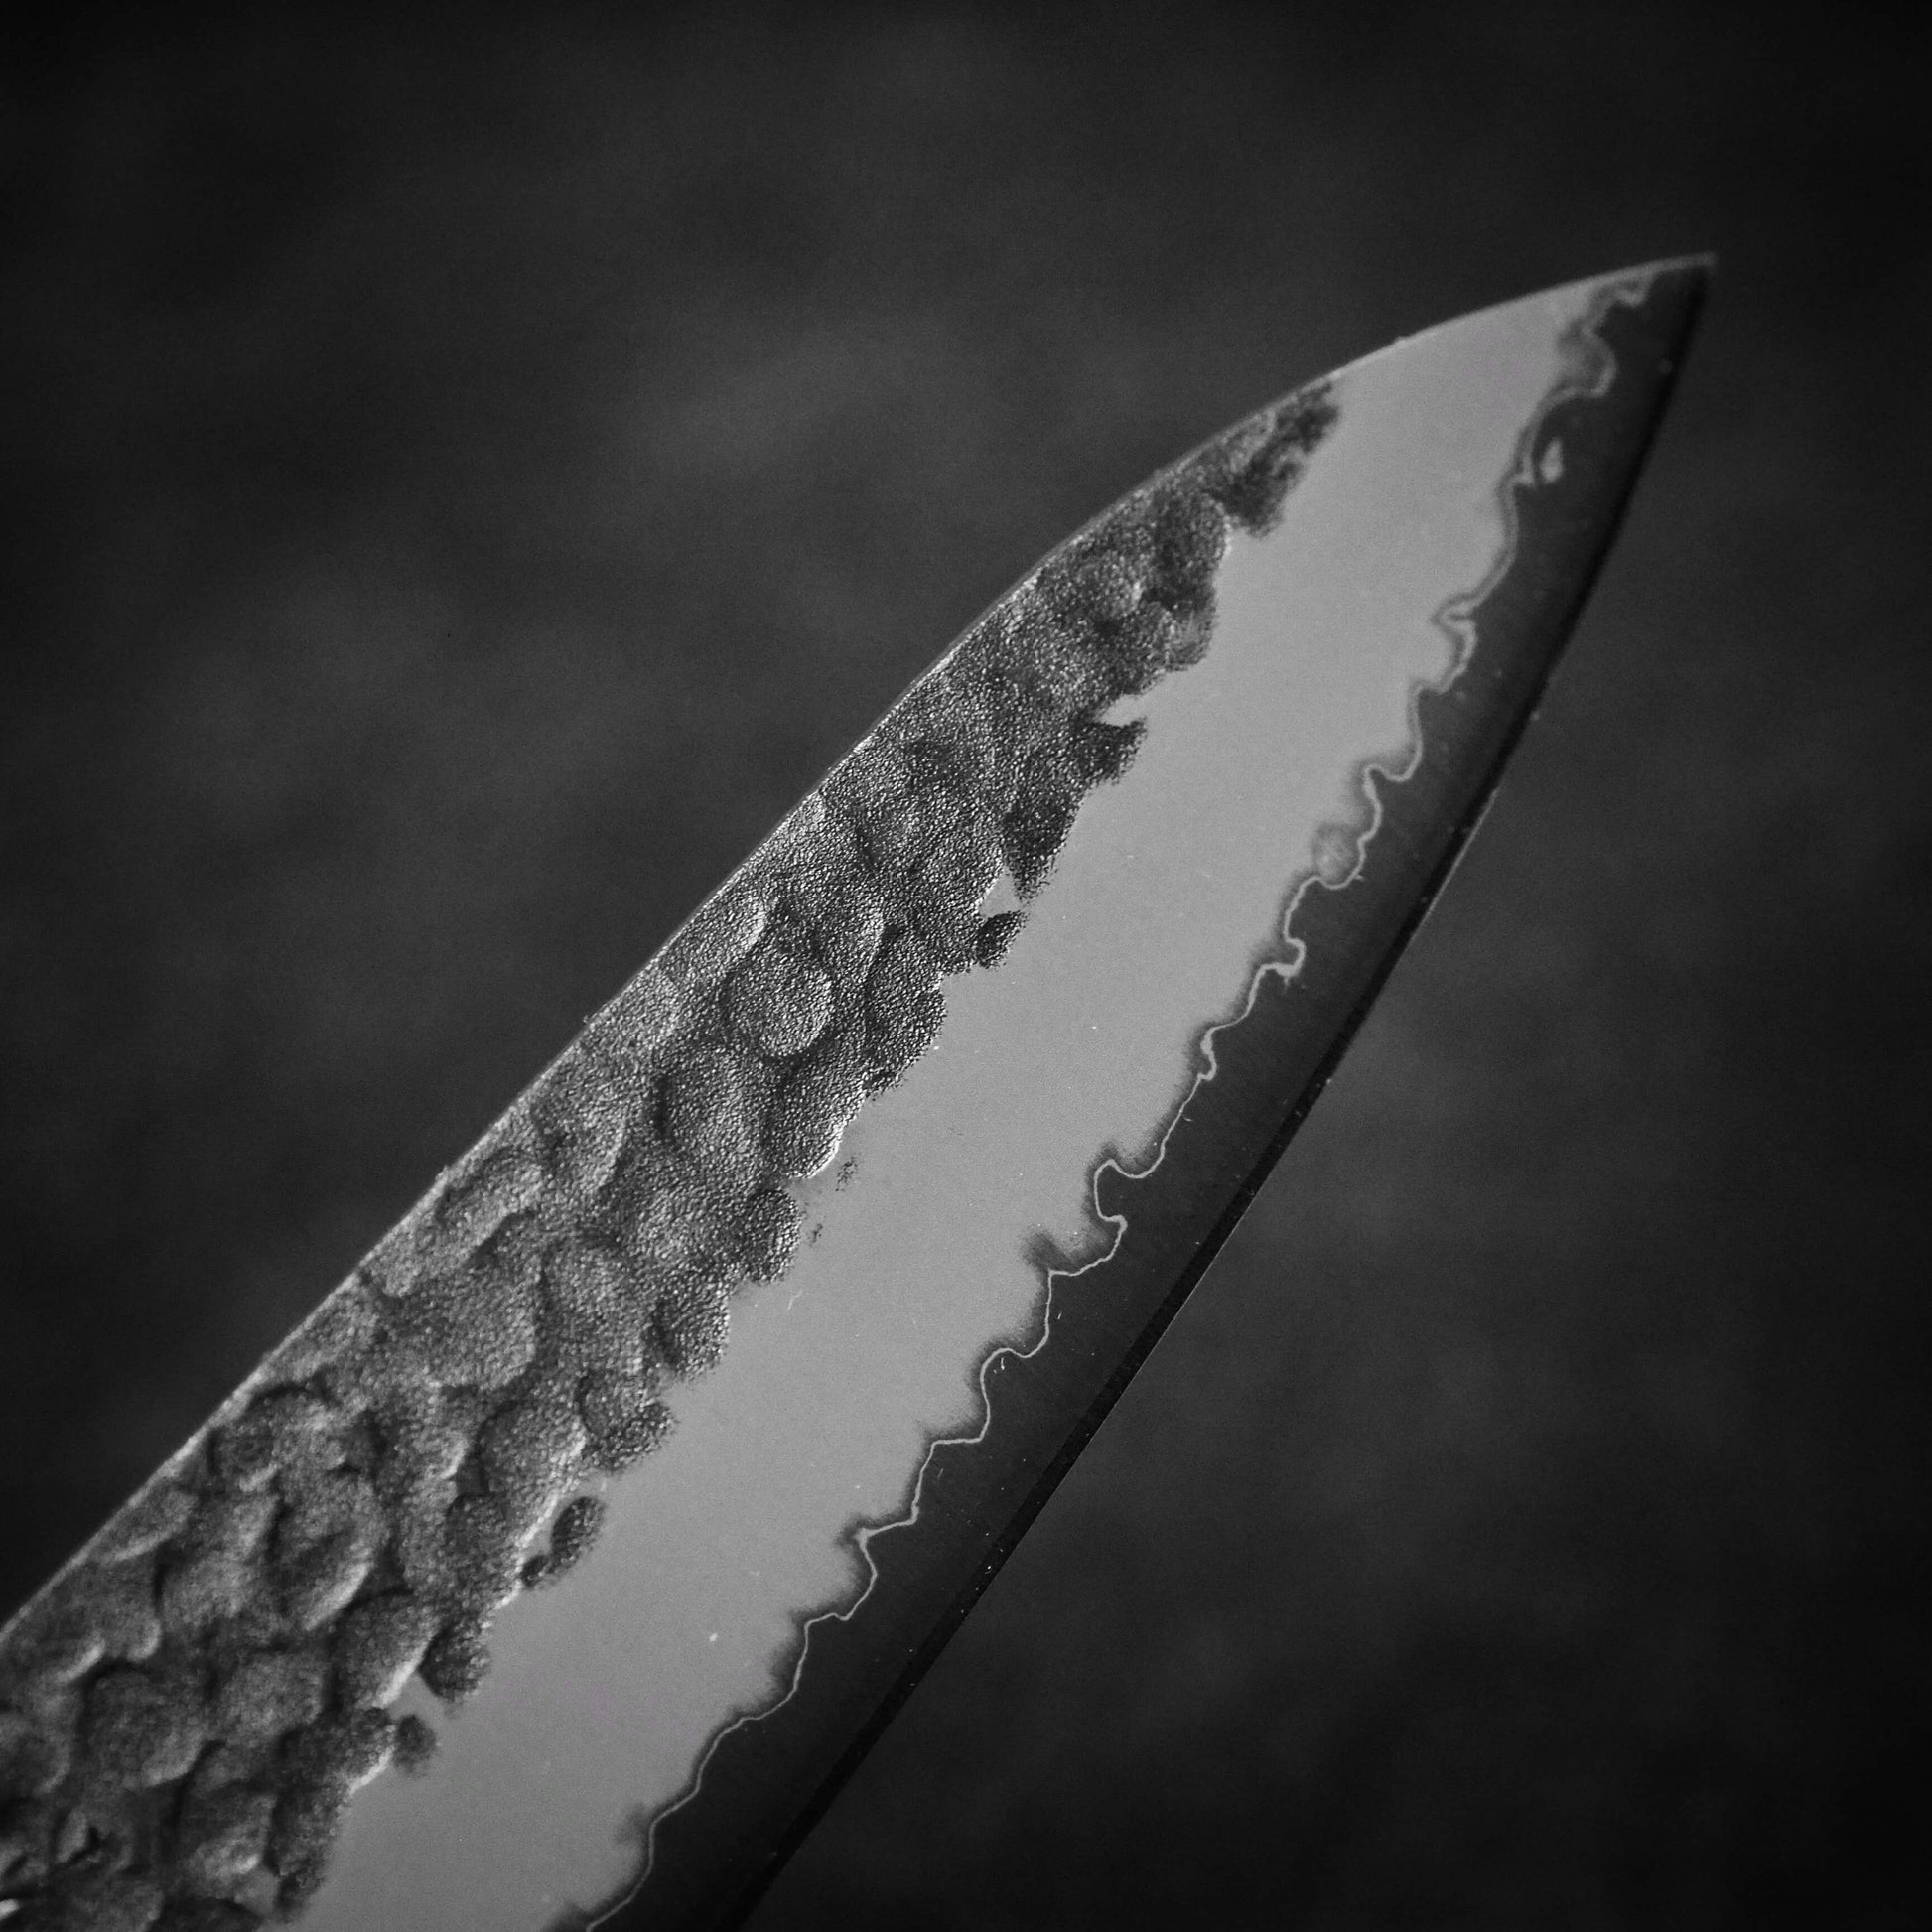 Yoshihiro tsuchime kurouchi AS (Aogami Super) 210mm gyuto (with saya) - Zahocho Japanese Knives